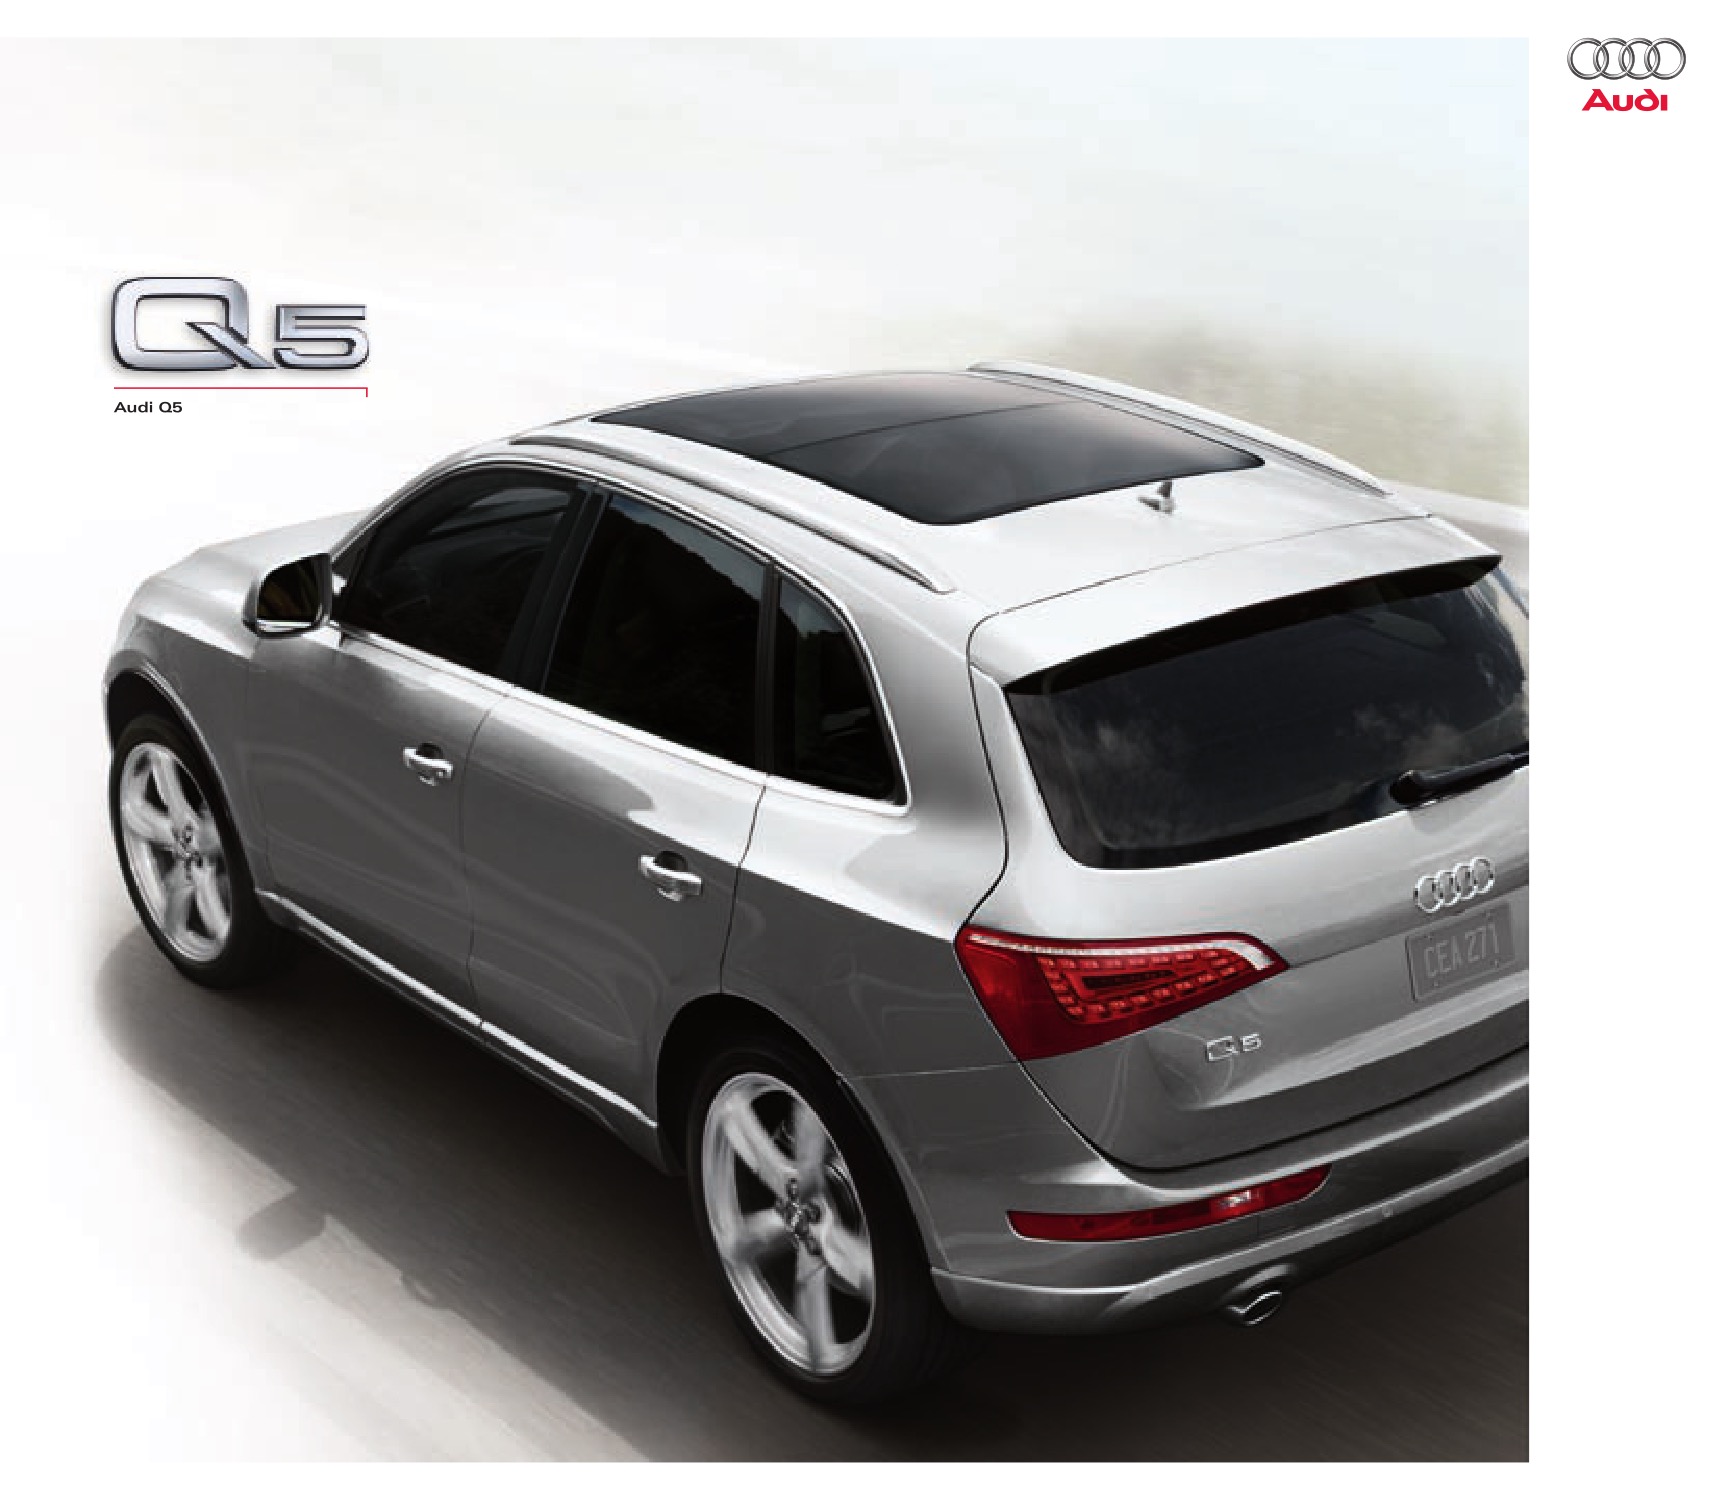 2009 Audi Q5 Brochure